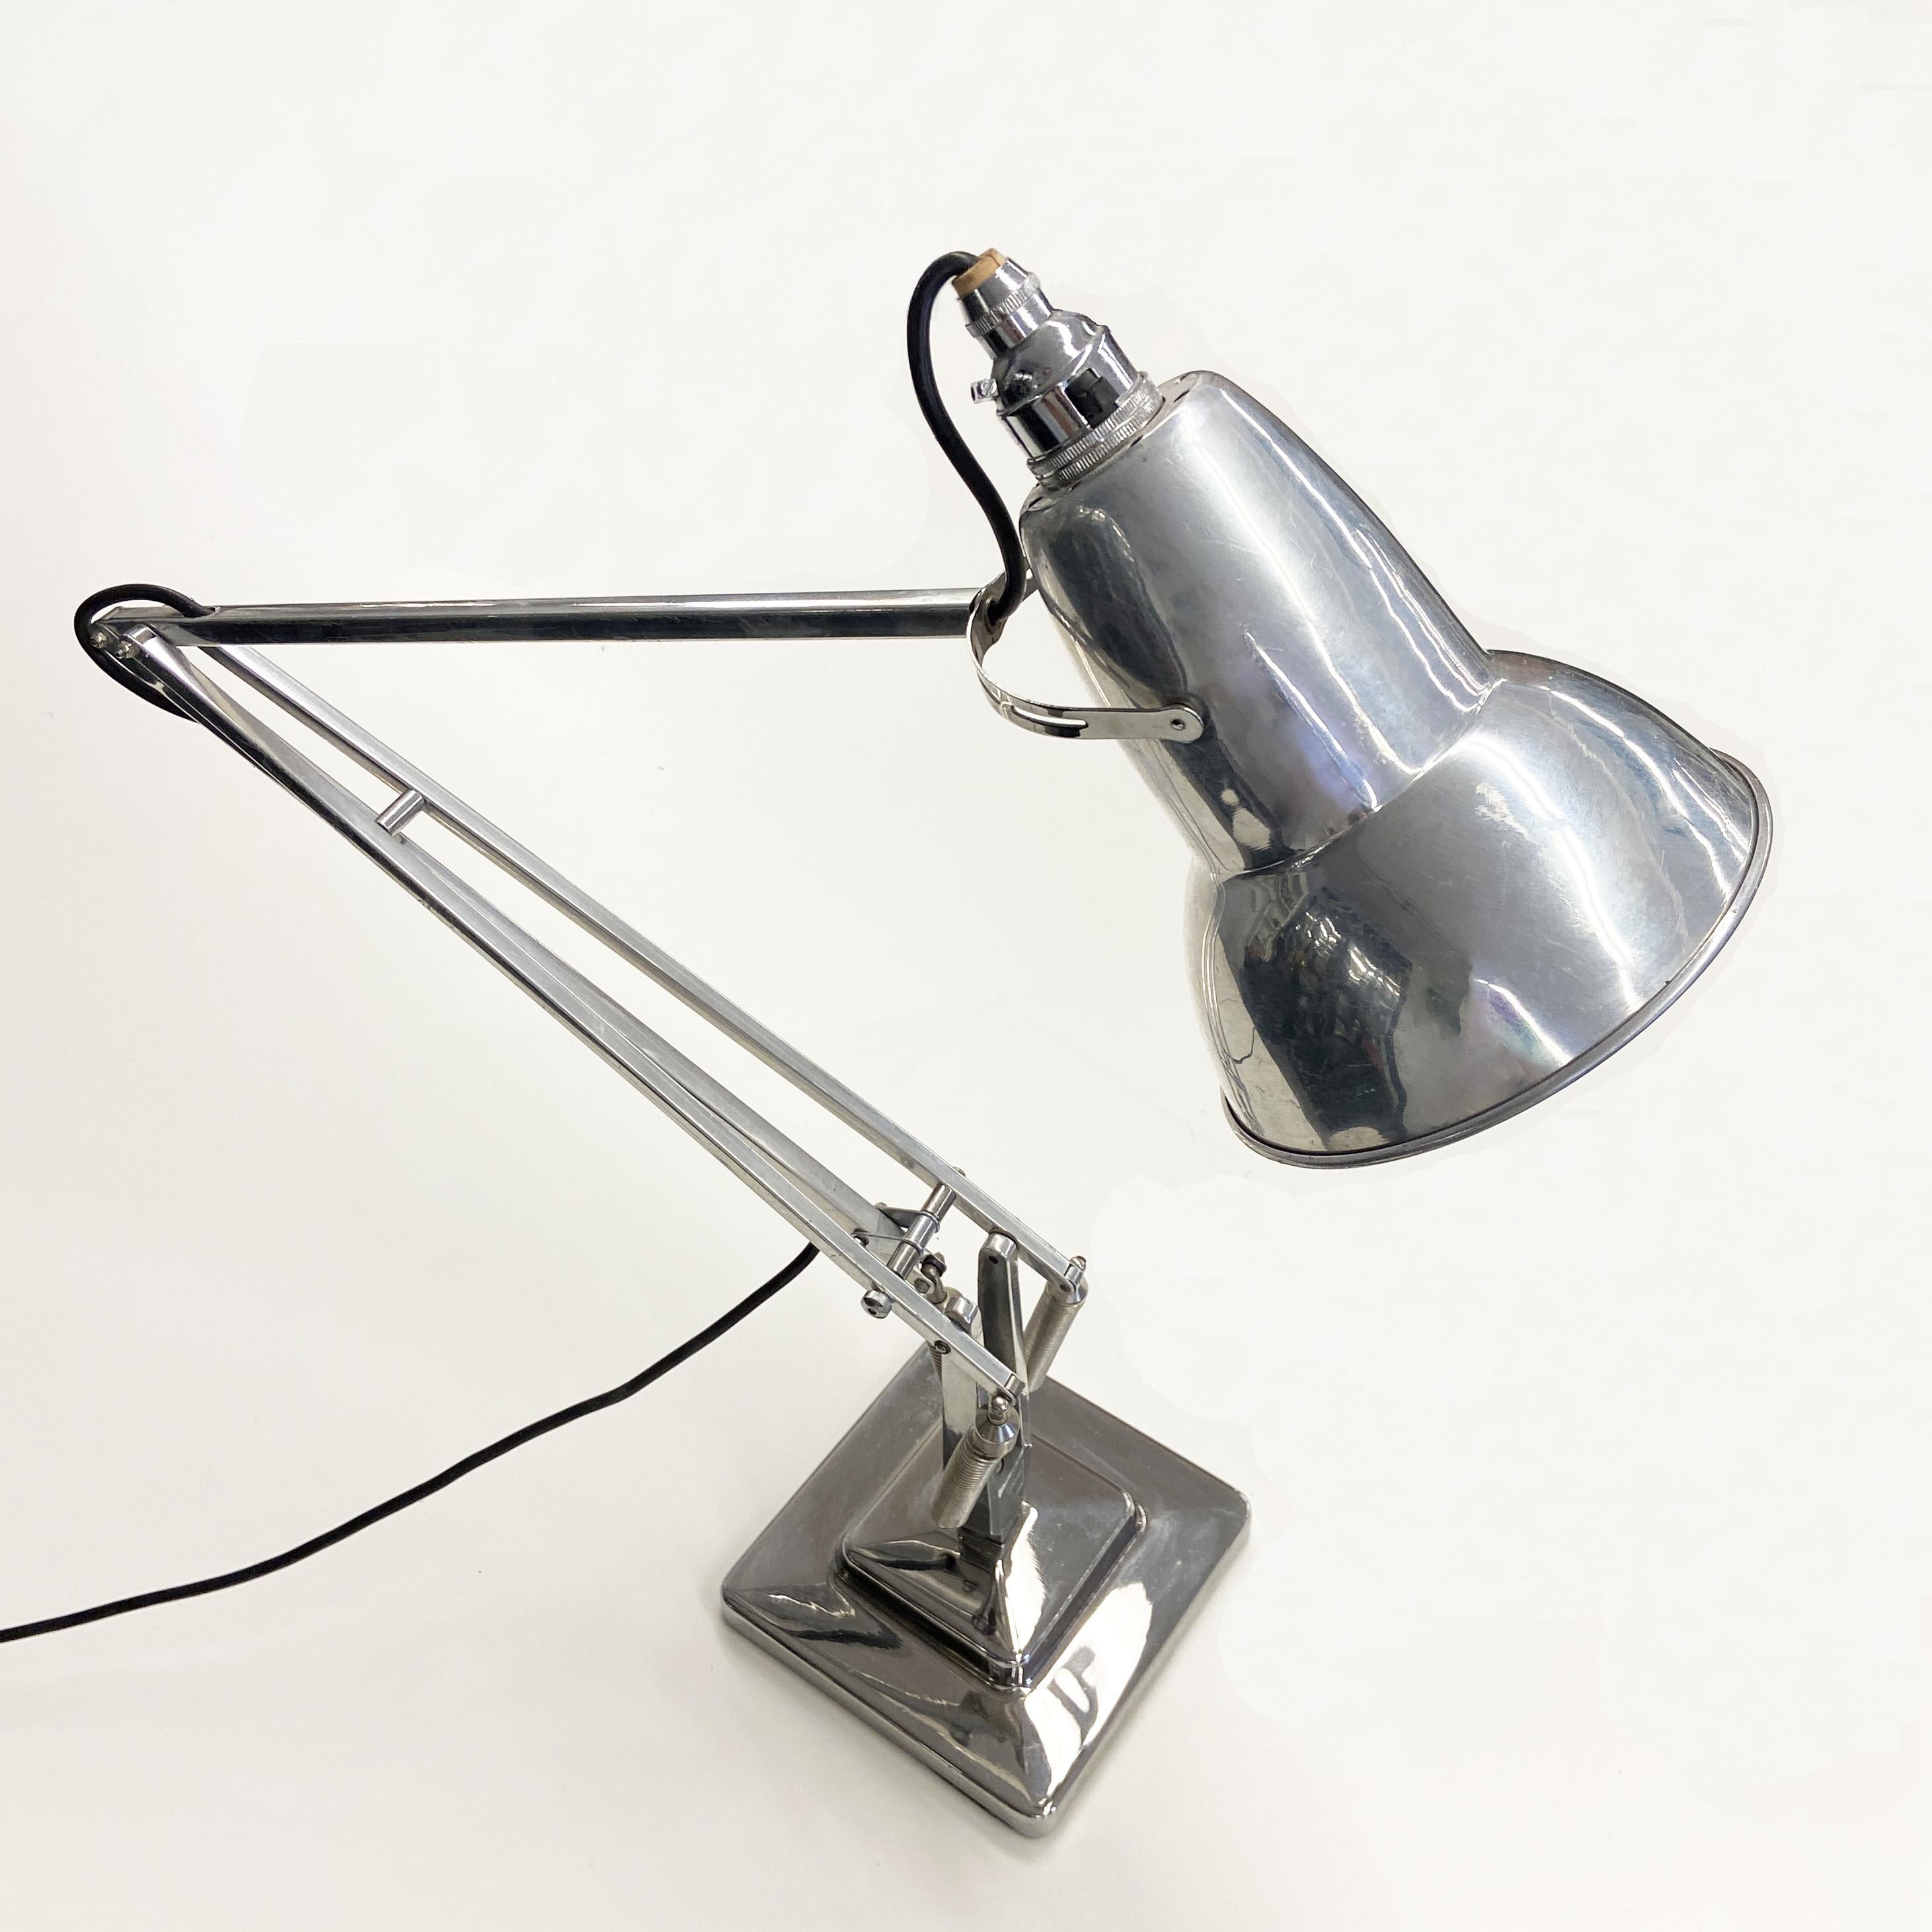 Offering a genuine design classic of a desk lamp, the original Vintage 